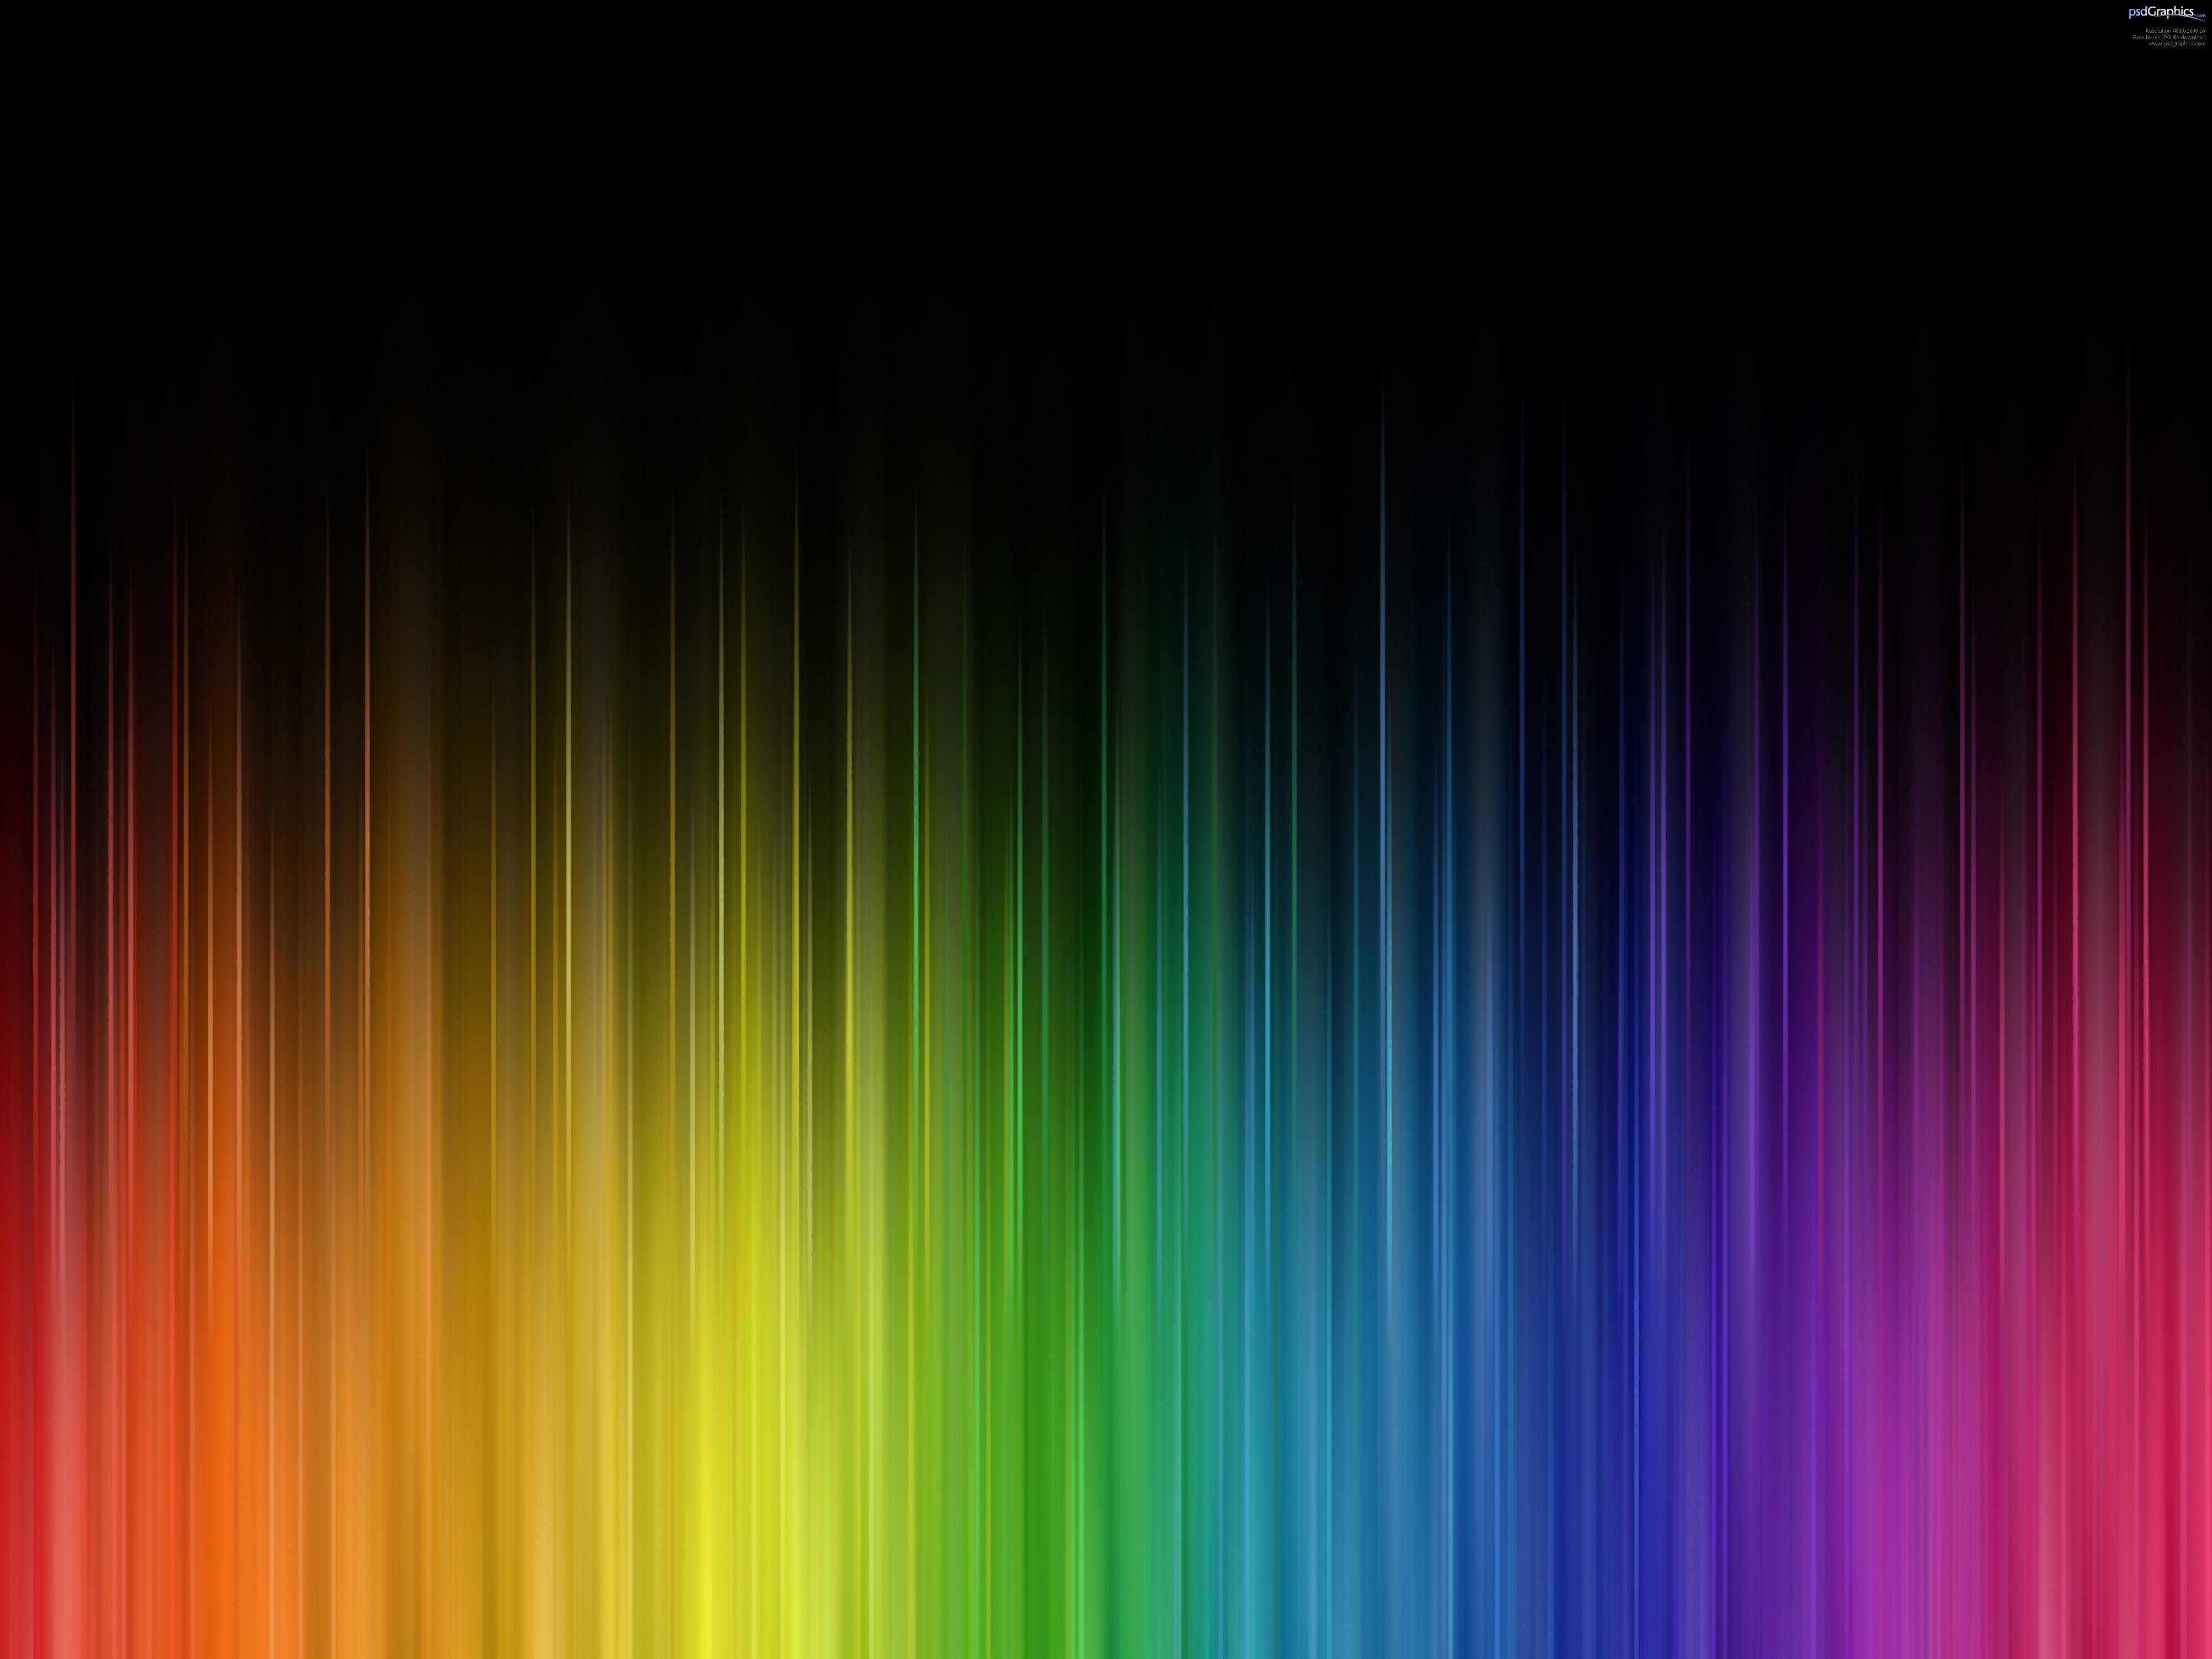 Download wallpaper: rainbow background, Rainbow, download photo